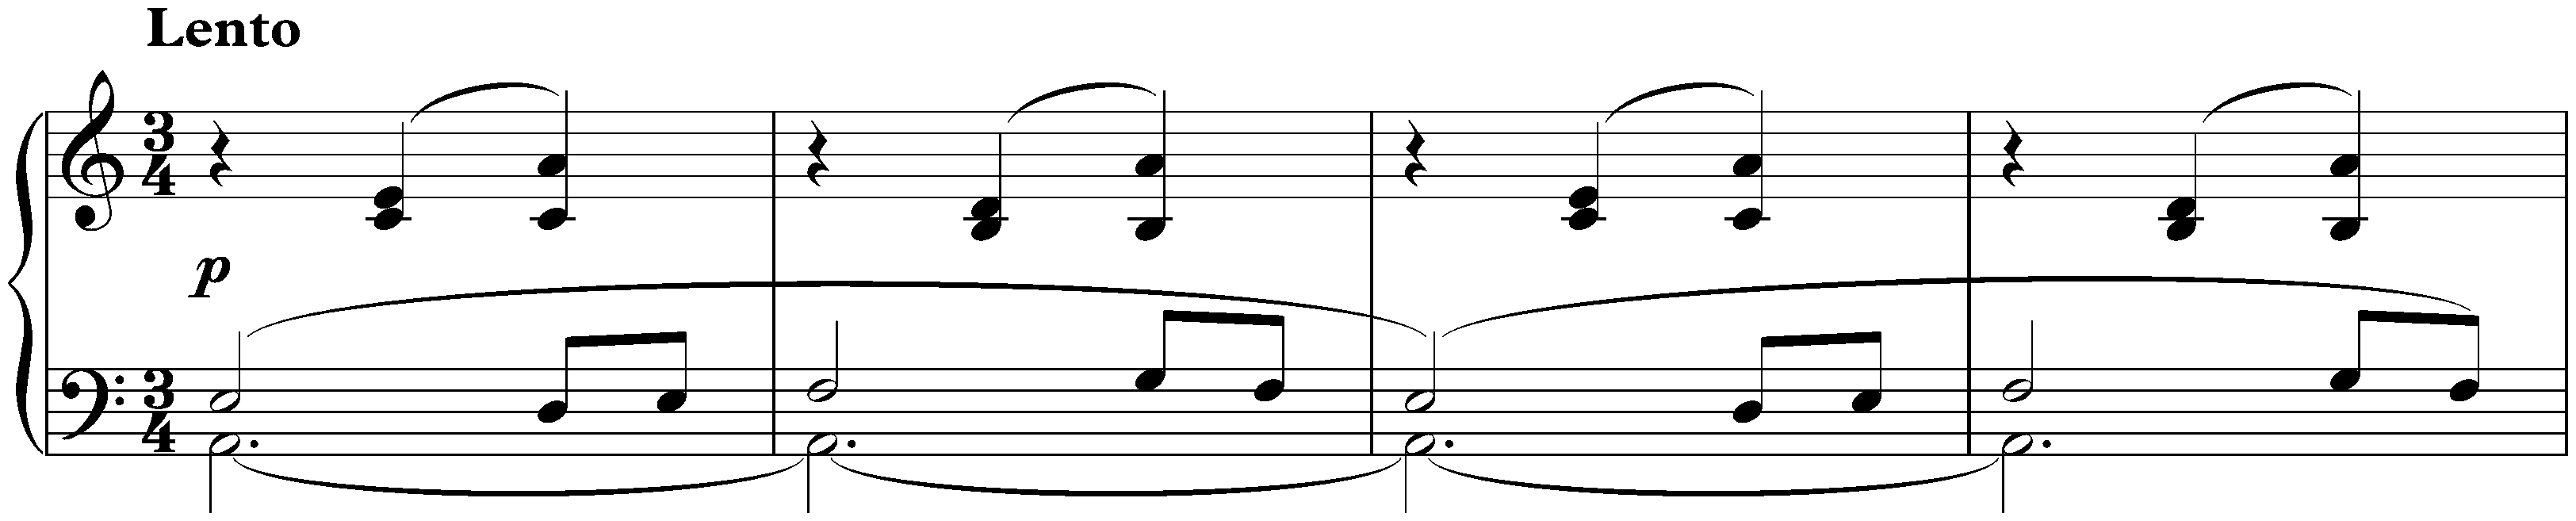 Three Valses, op. 34; 2. A minor